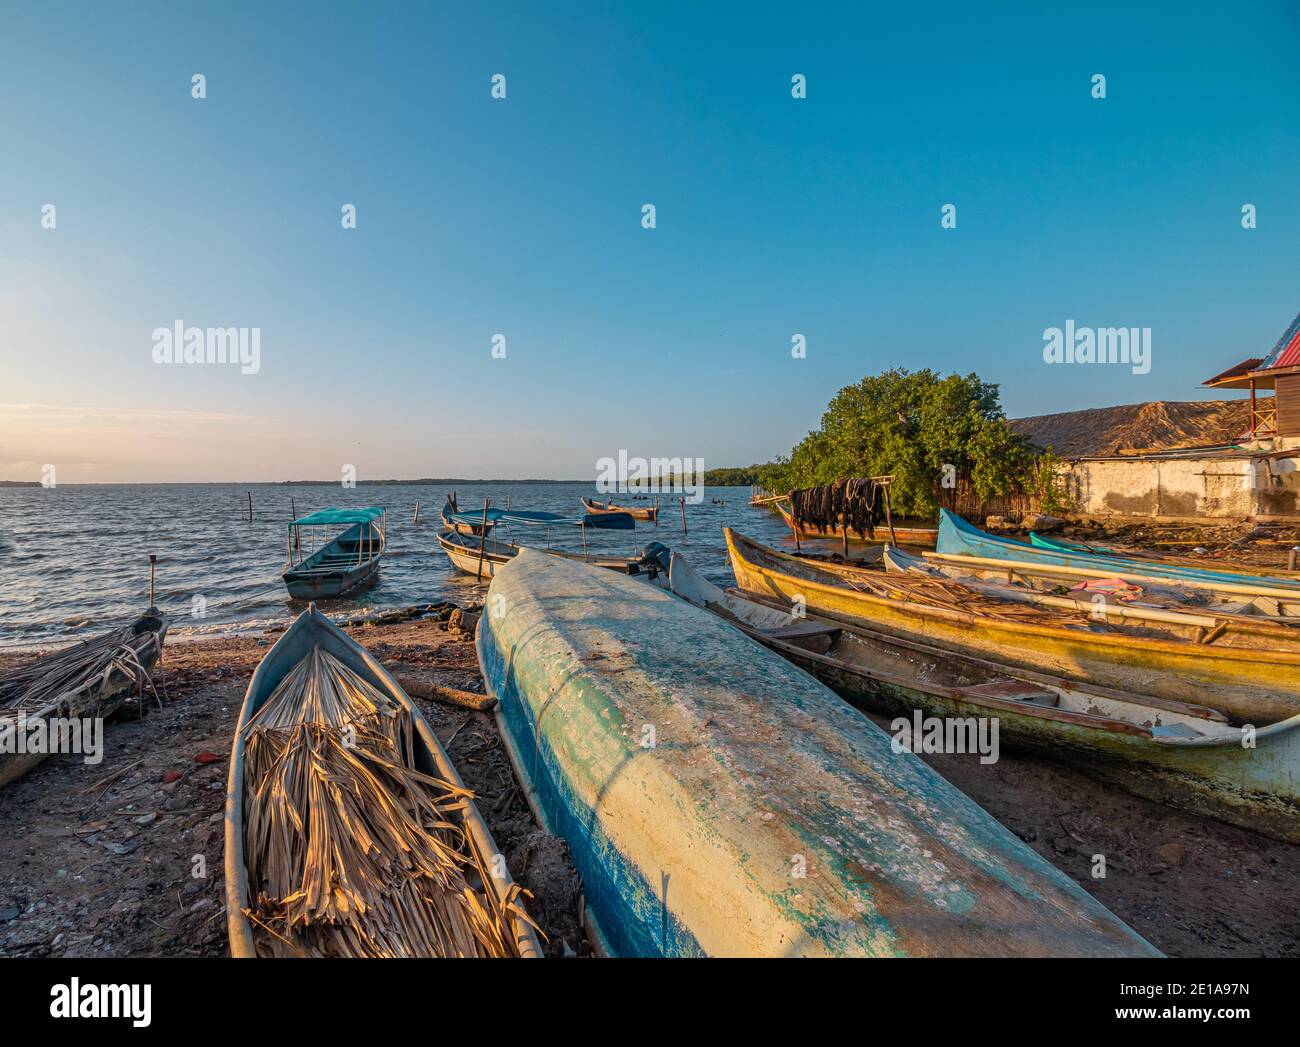 Un grupo de coloridos barcos rústicos están descansando sobre un playa justo después de actividades de pesca Foto de stock